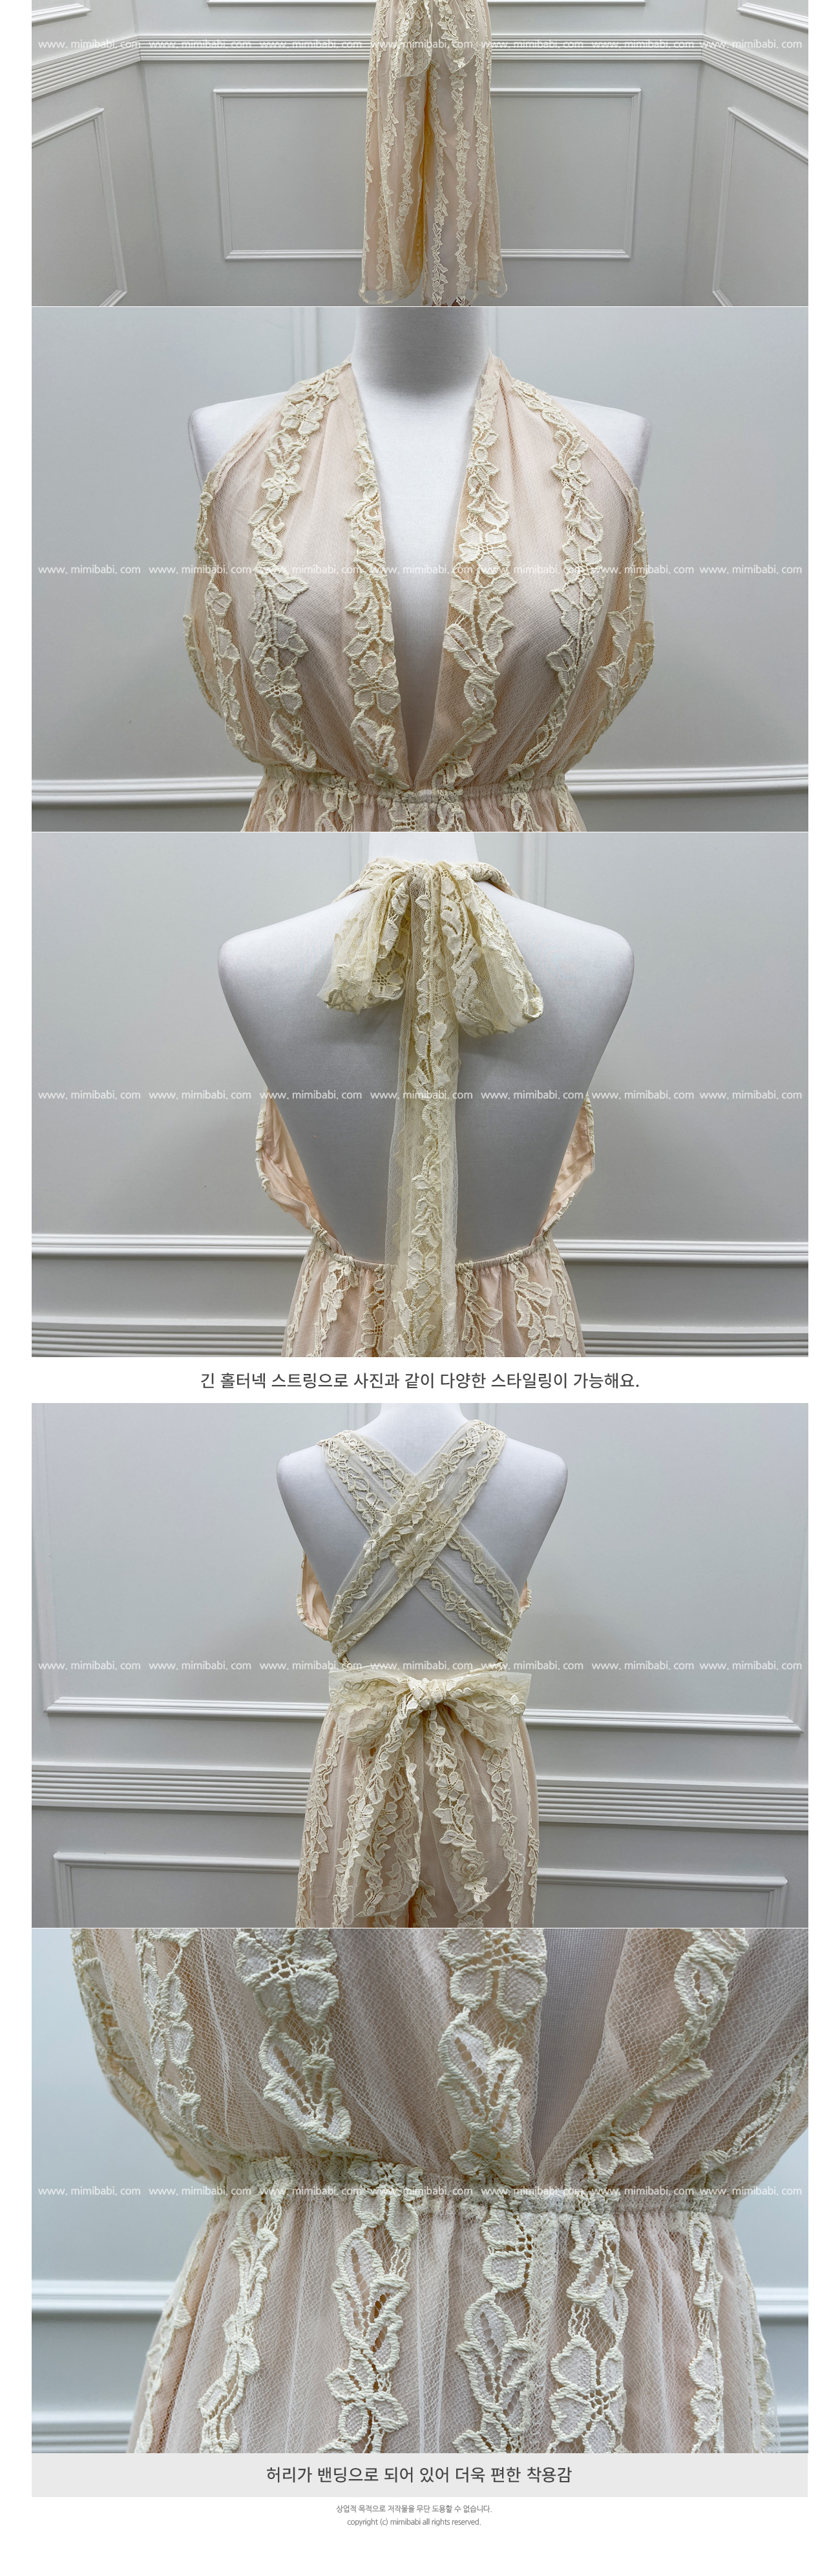 dress detail image-S1L5